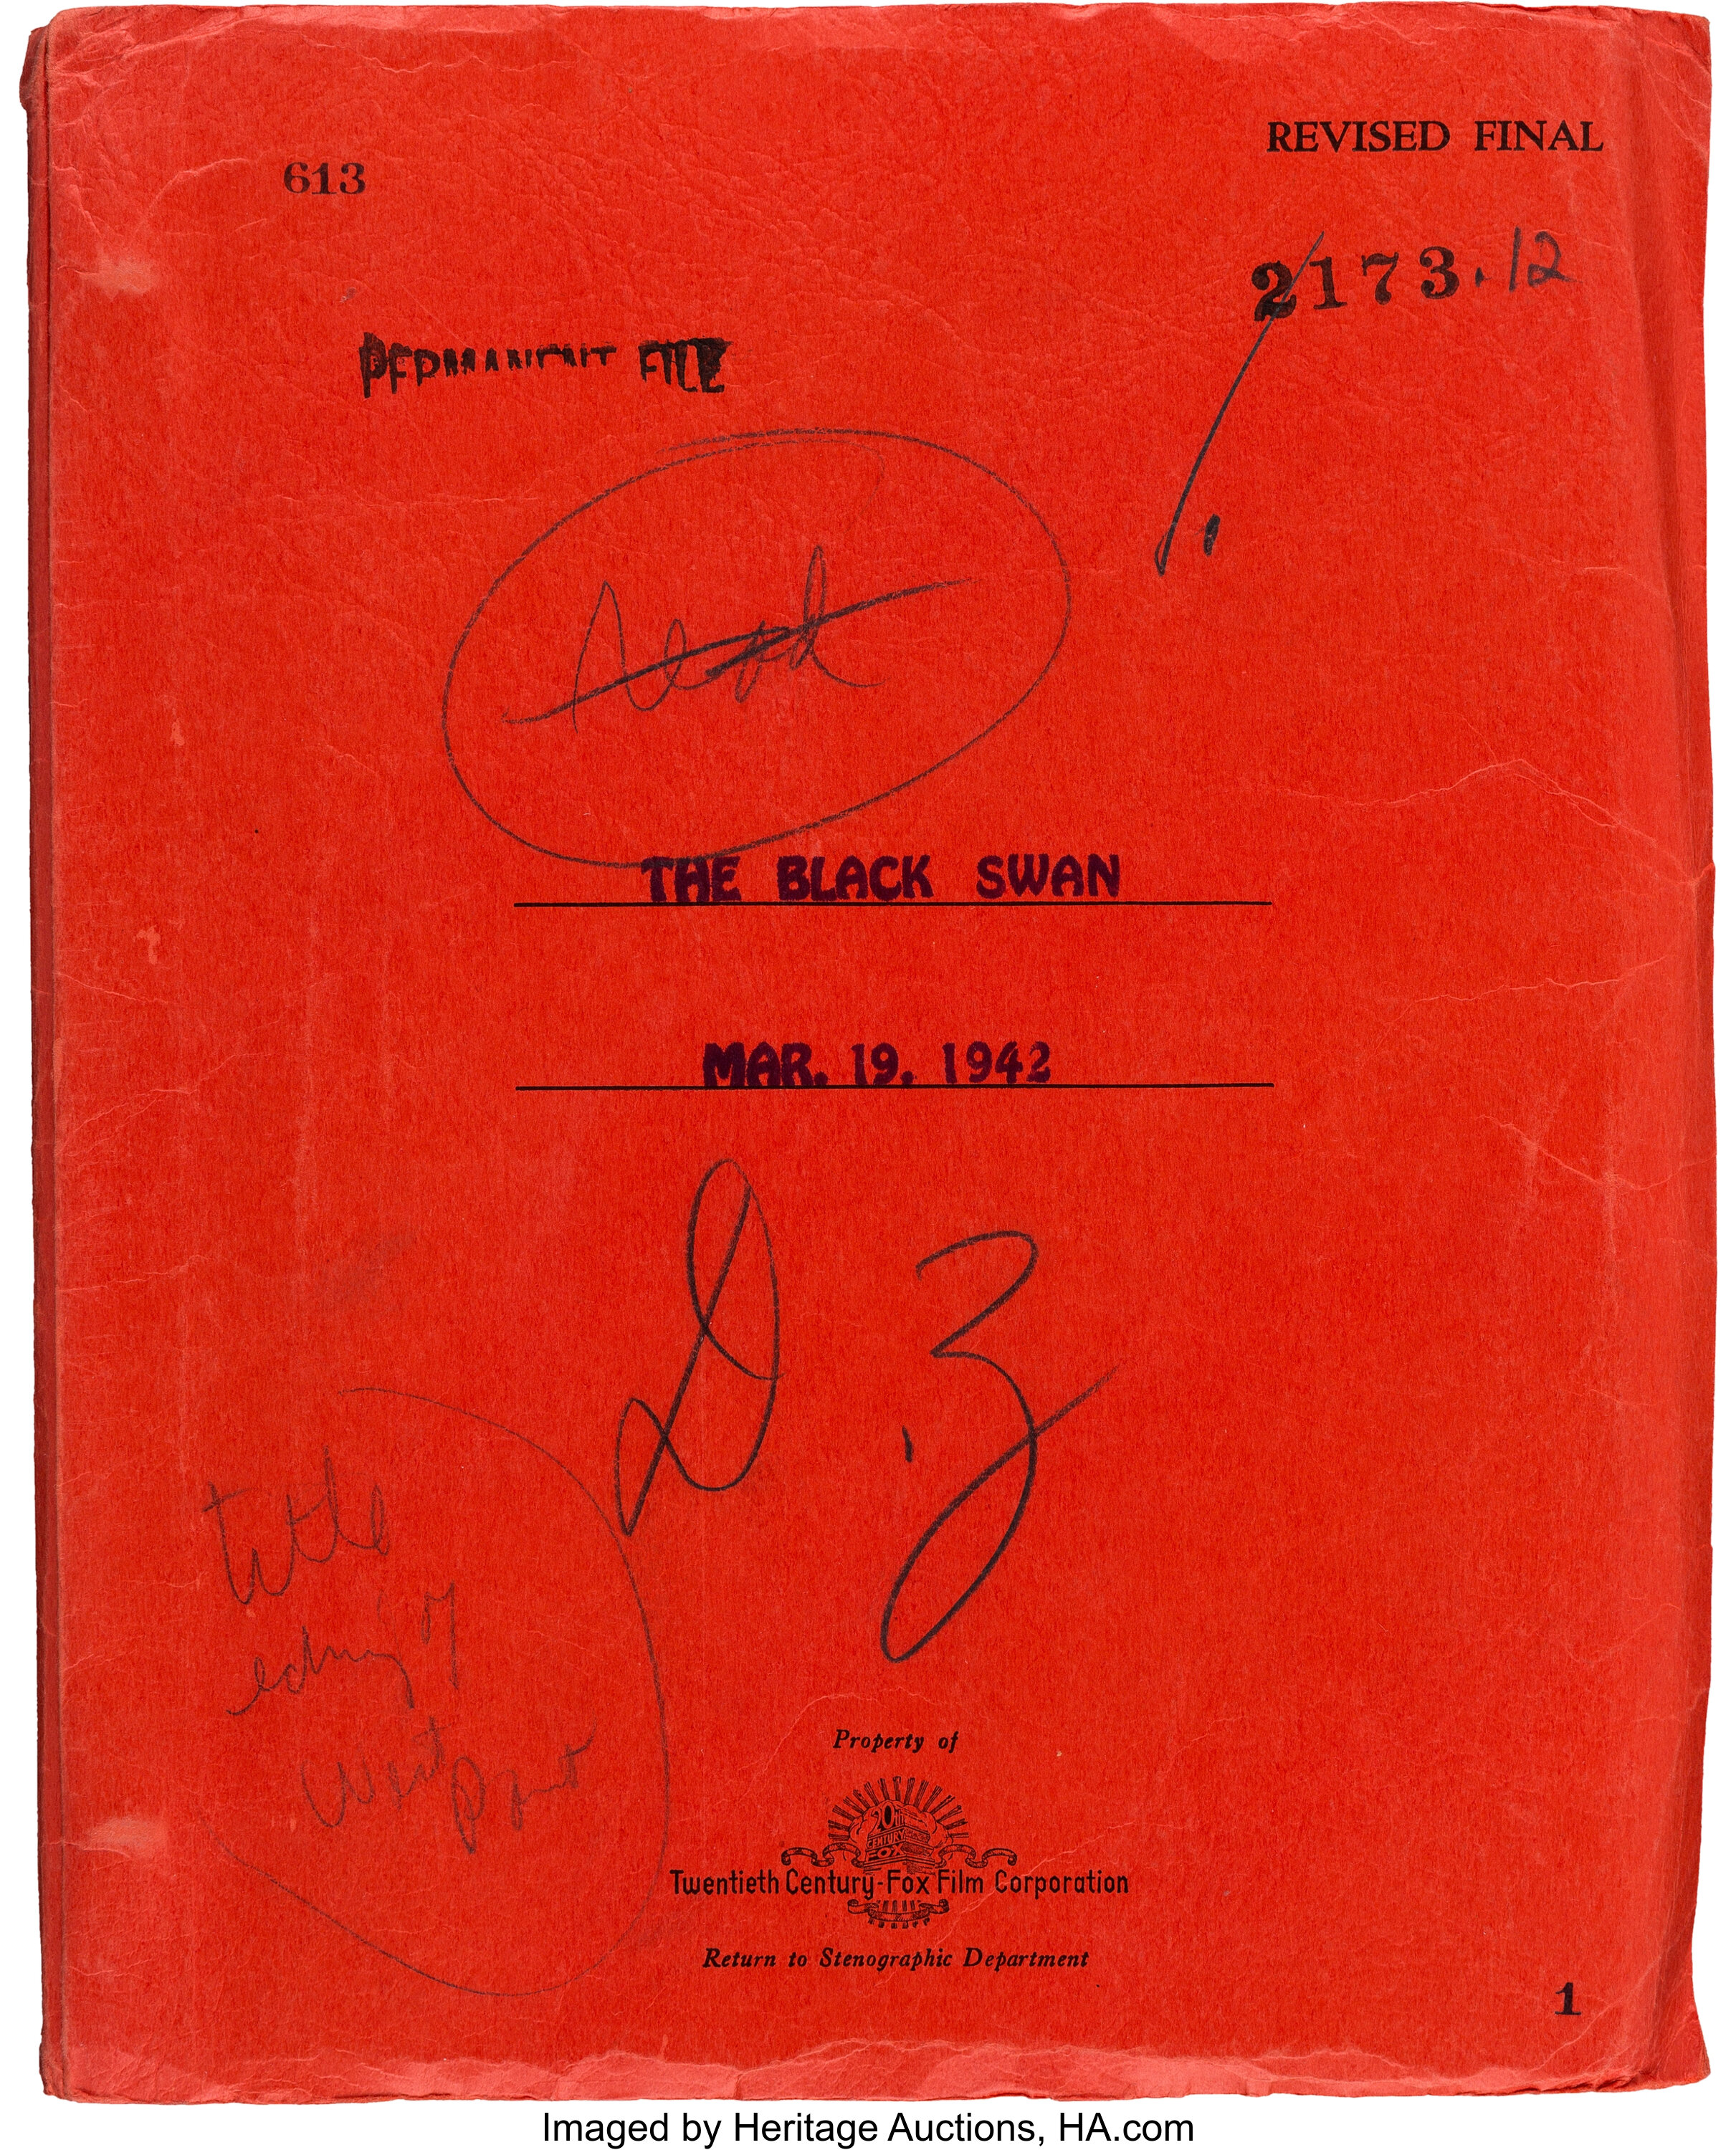 Script from "The Black Movie/TV Memorabilia Documents | Lot #89286 | Heritage Auctions